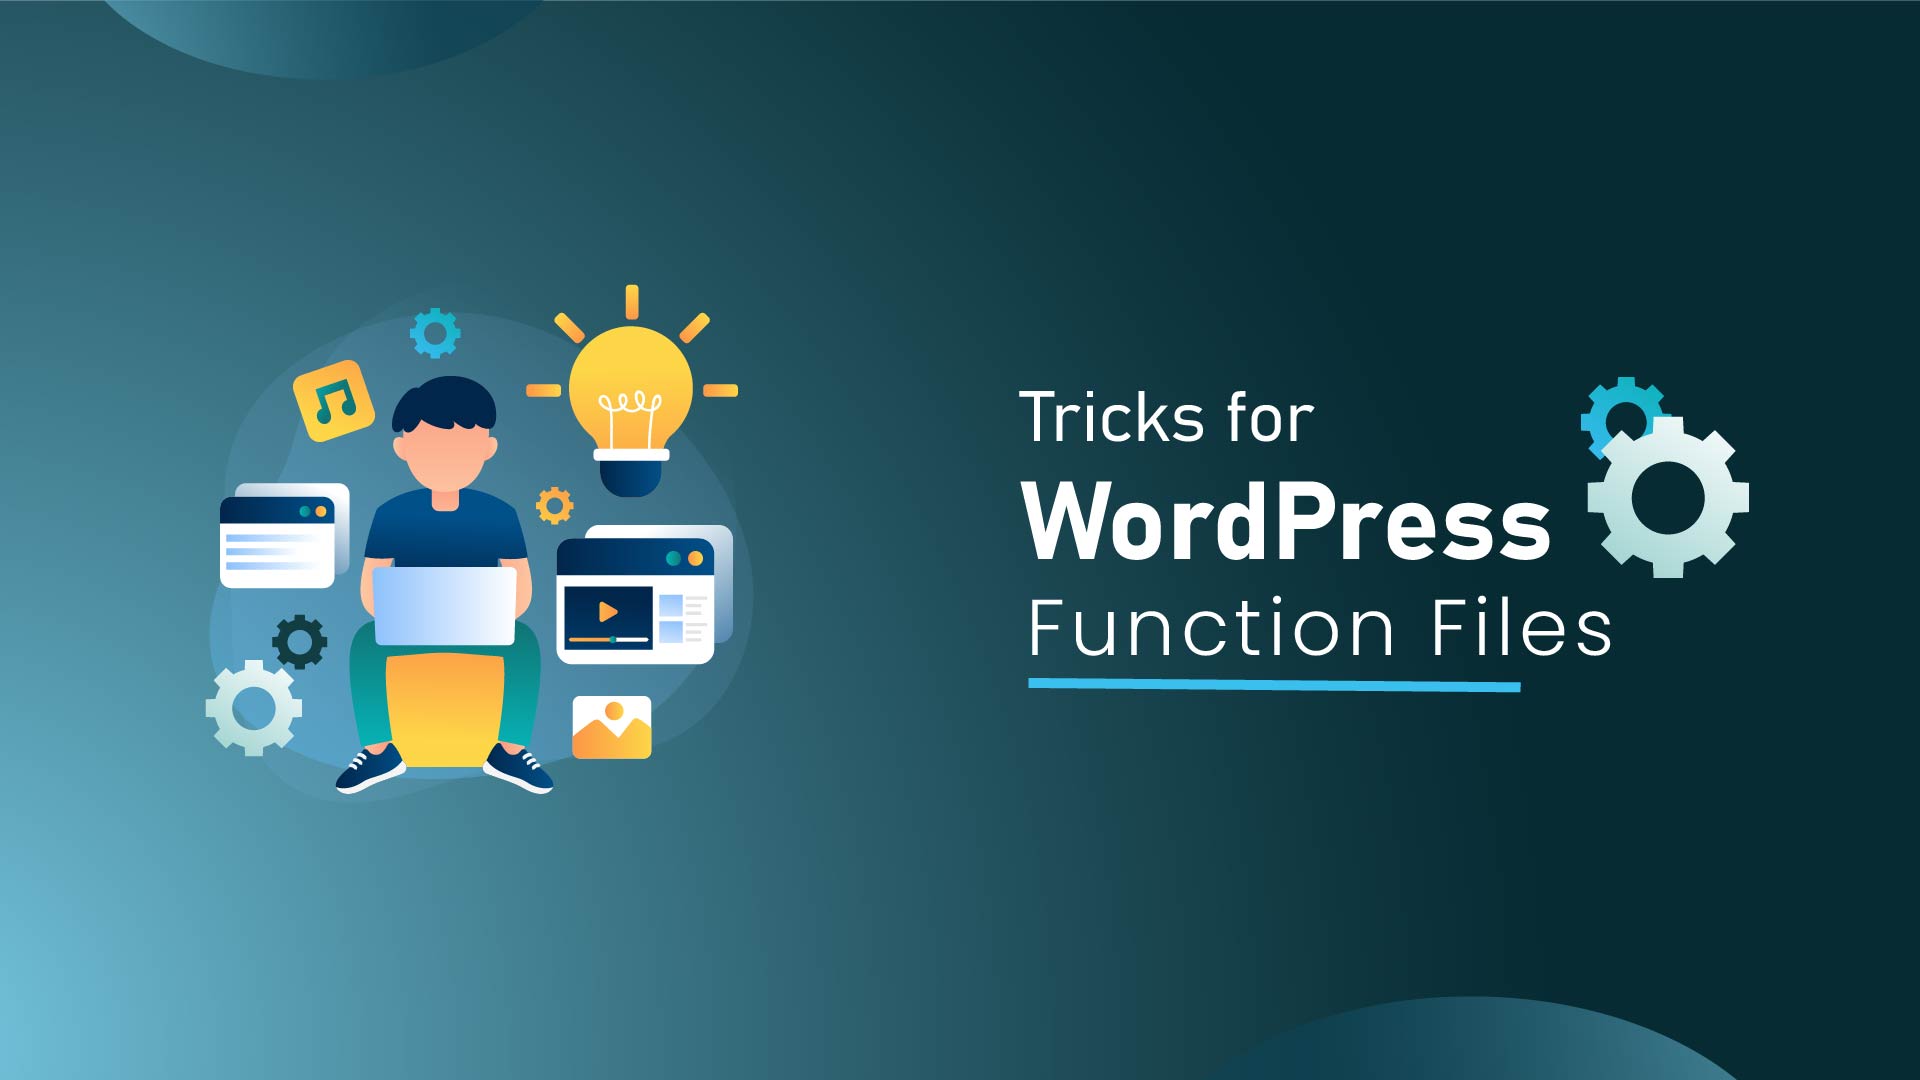 WordPress functions files